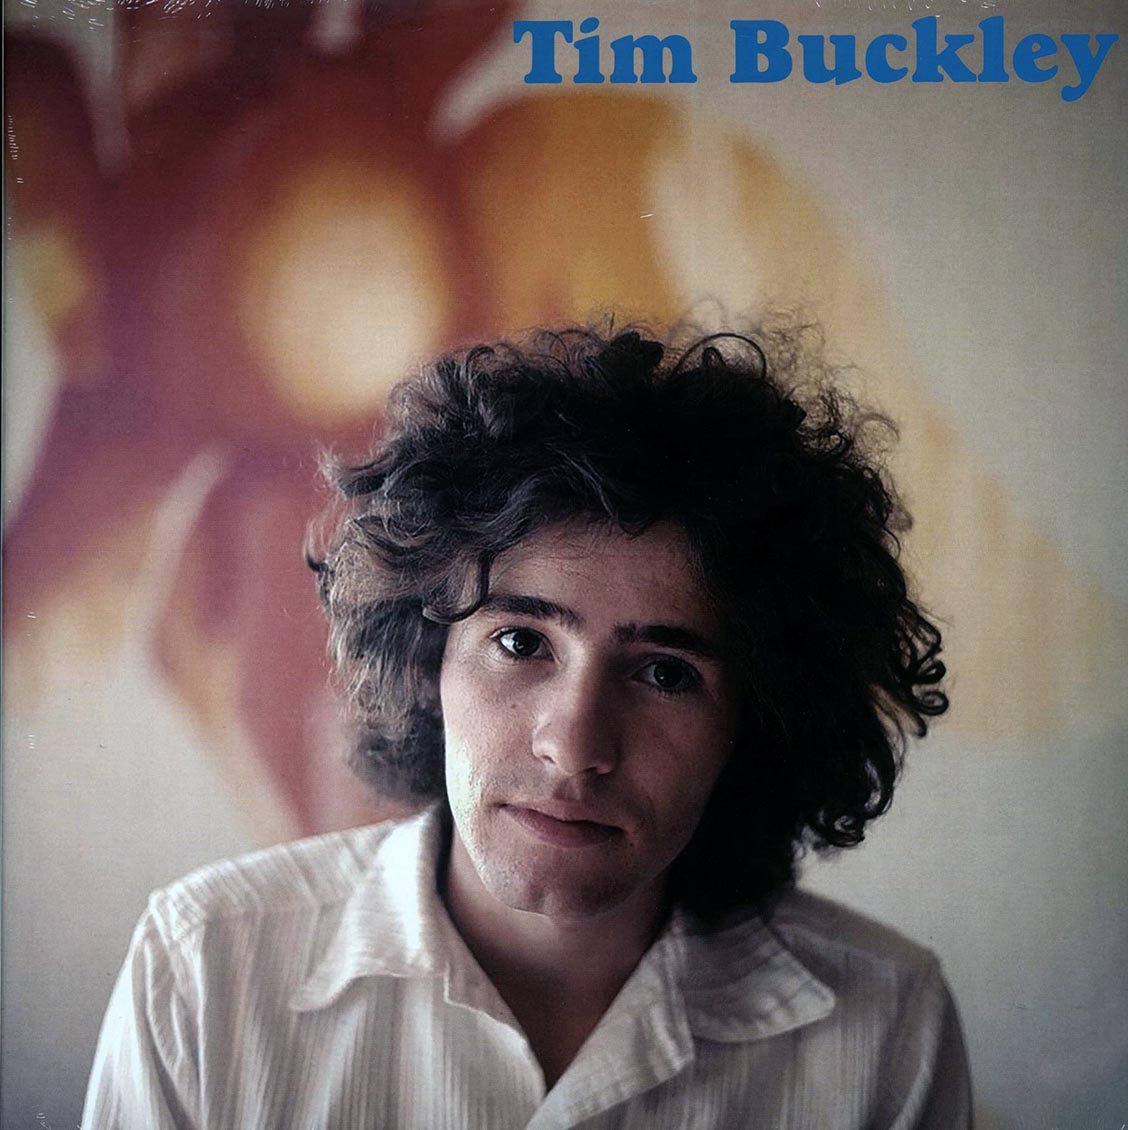 Tim Buckley - Tim Buckley